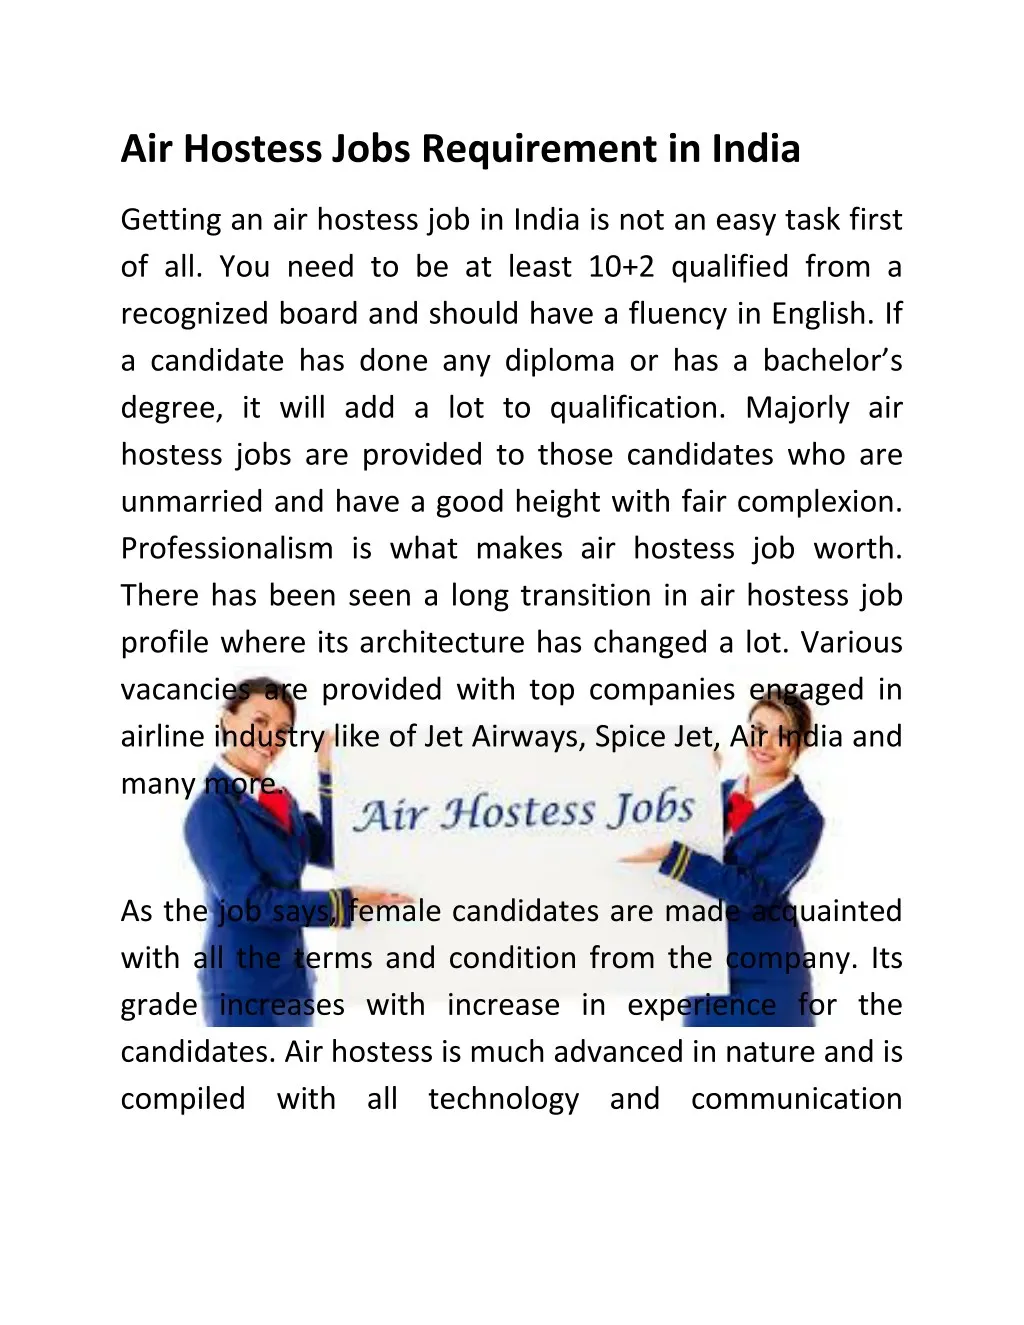 Air hostess job entry requirements